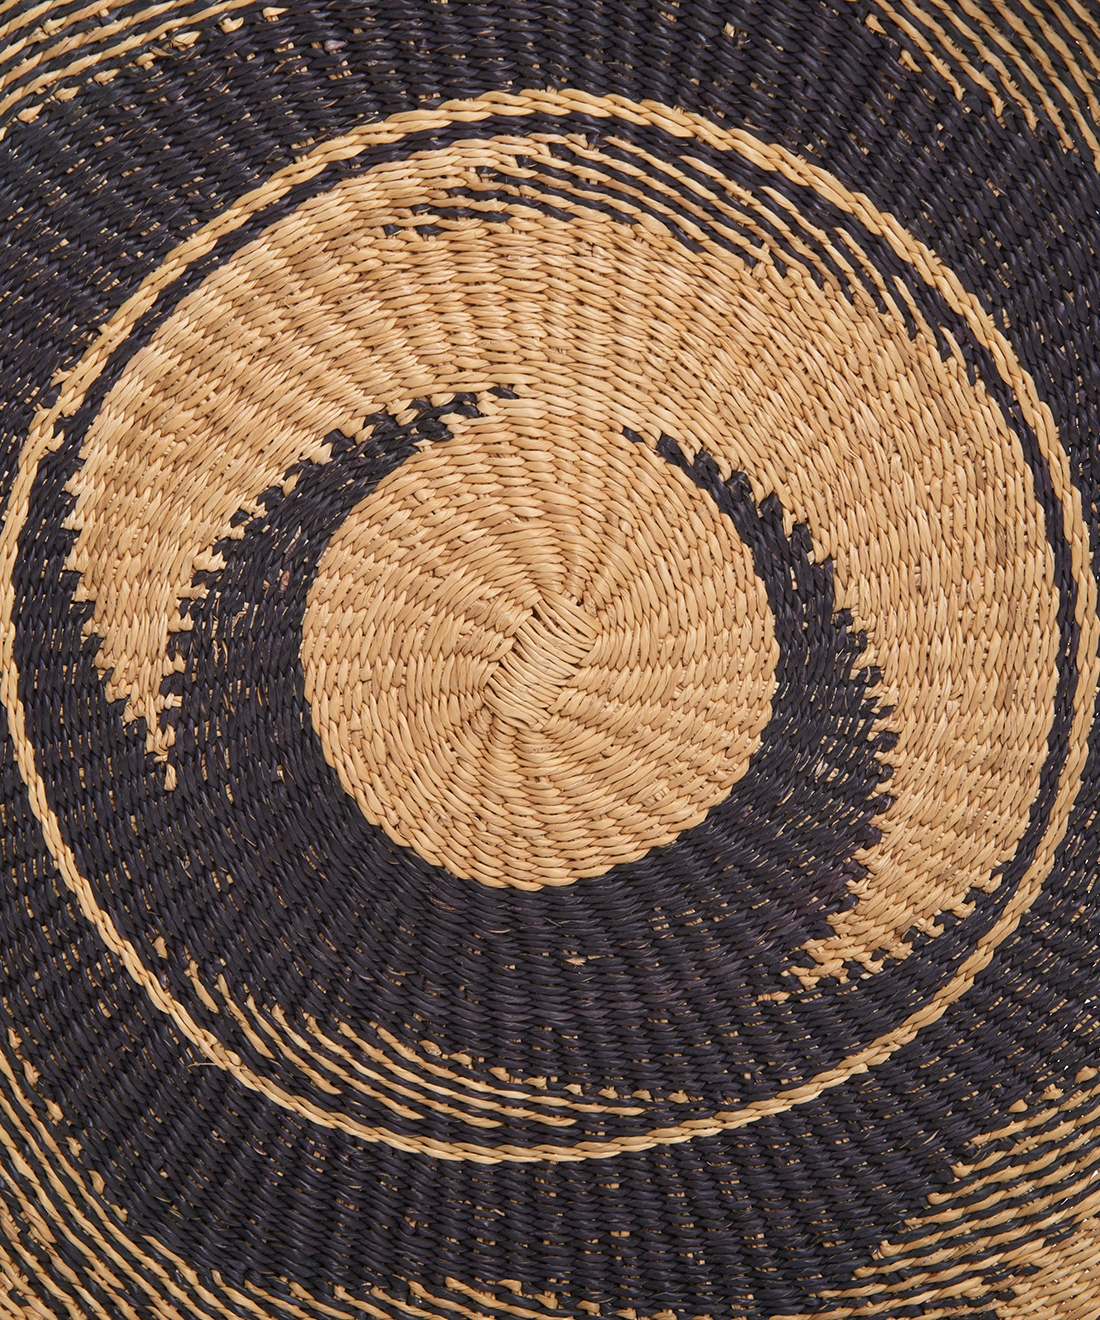 Medium Woven Wall Basket with Handles, 5